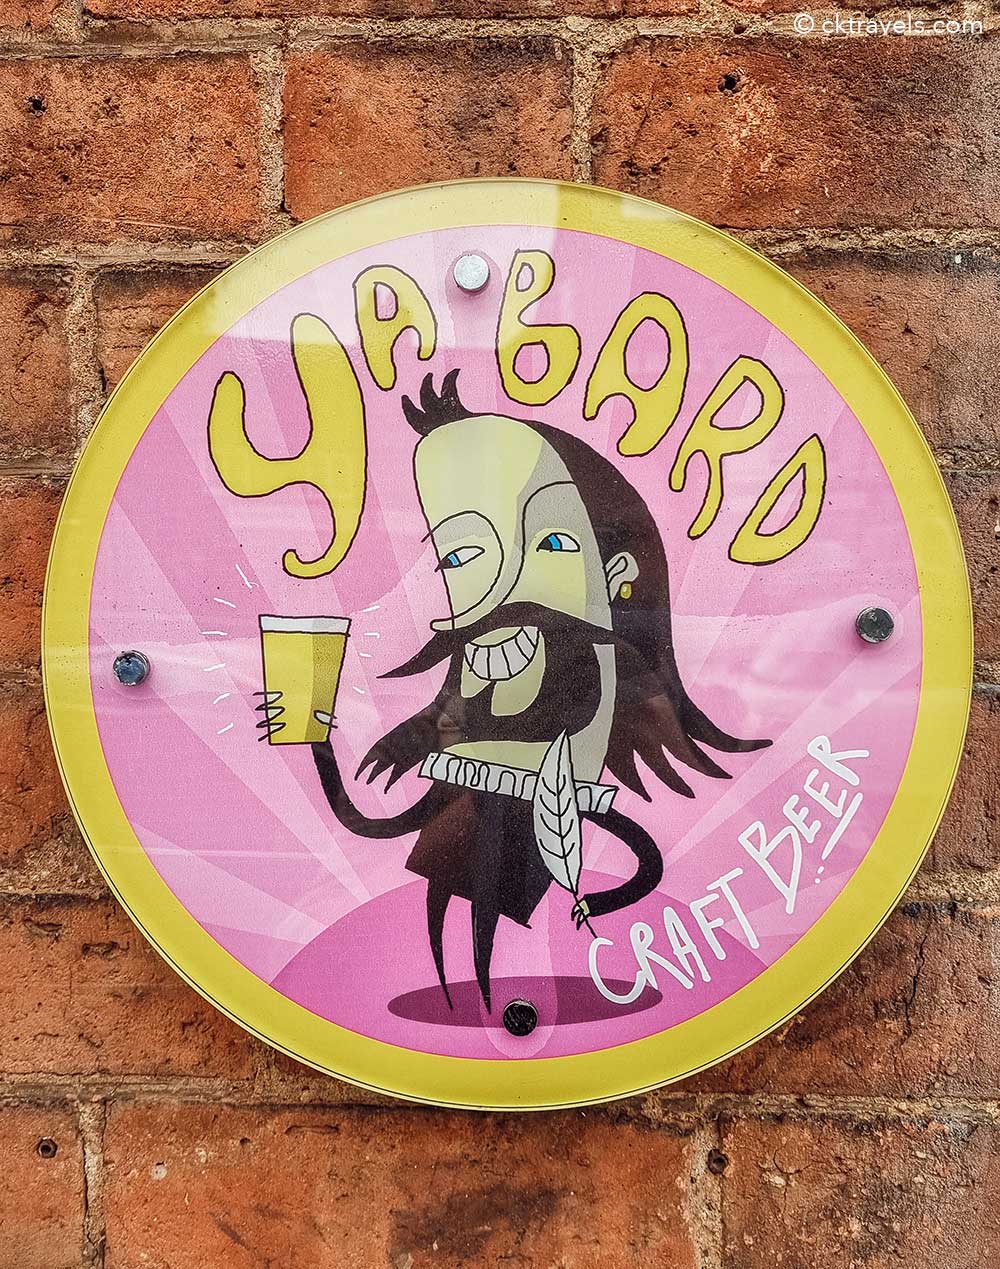 Ya-Bard Craft Beer bar Stratford-Upon-Avon